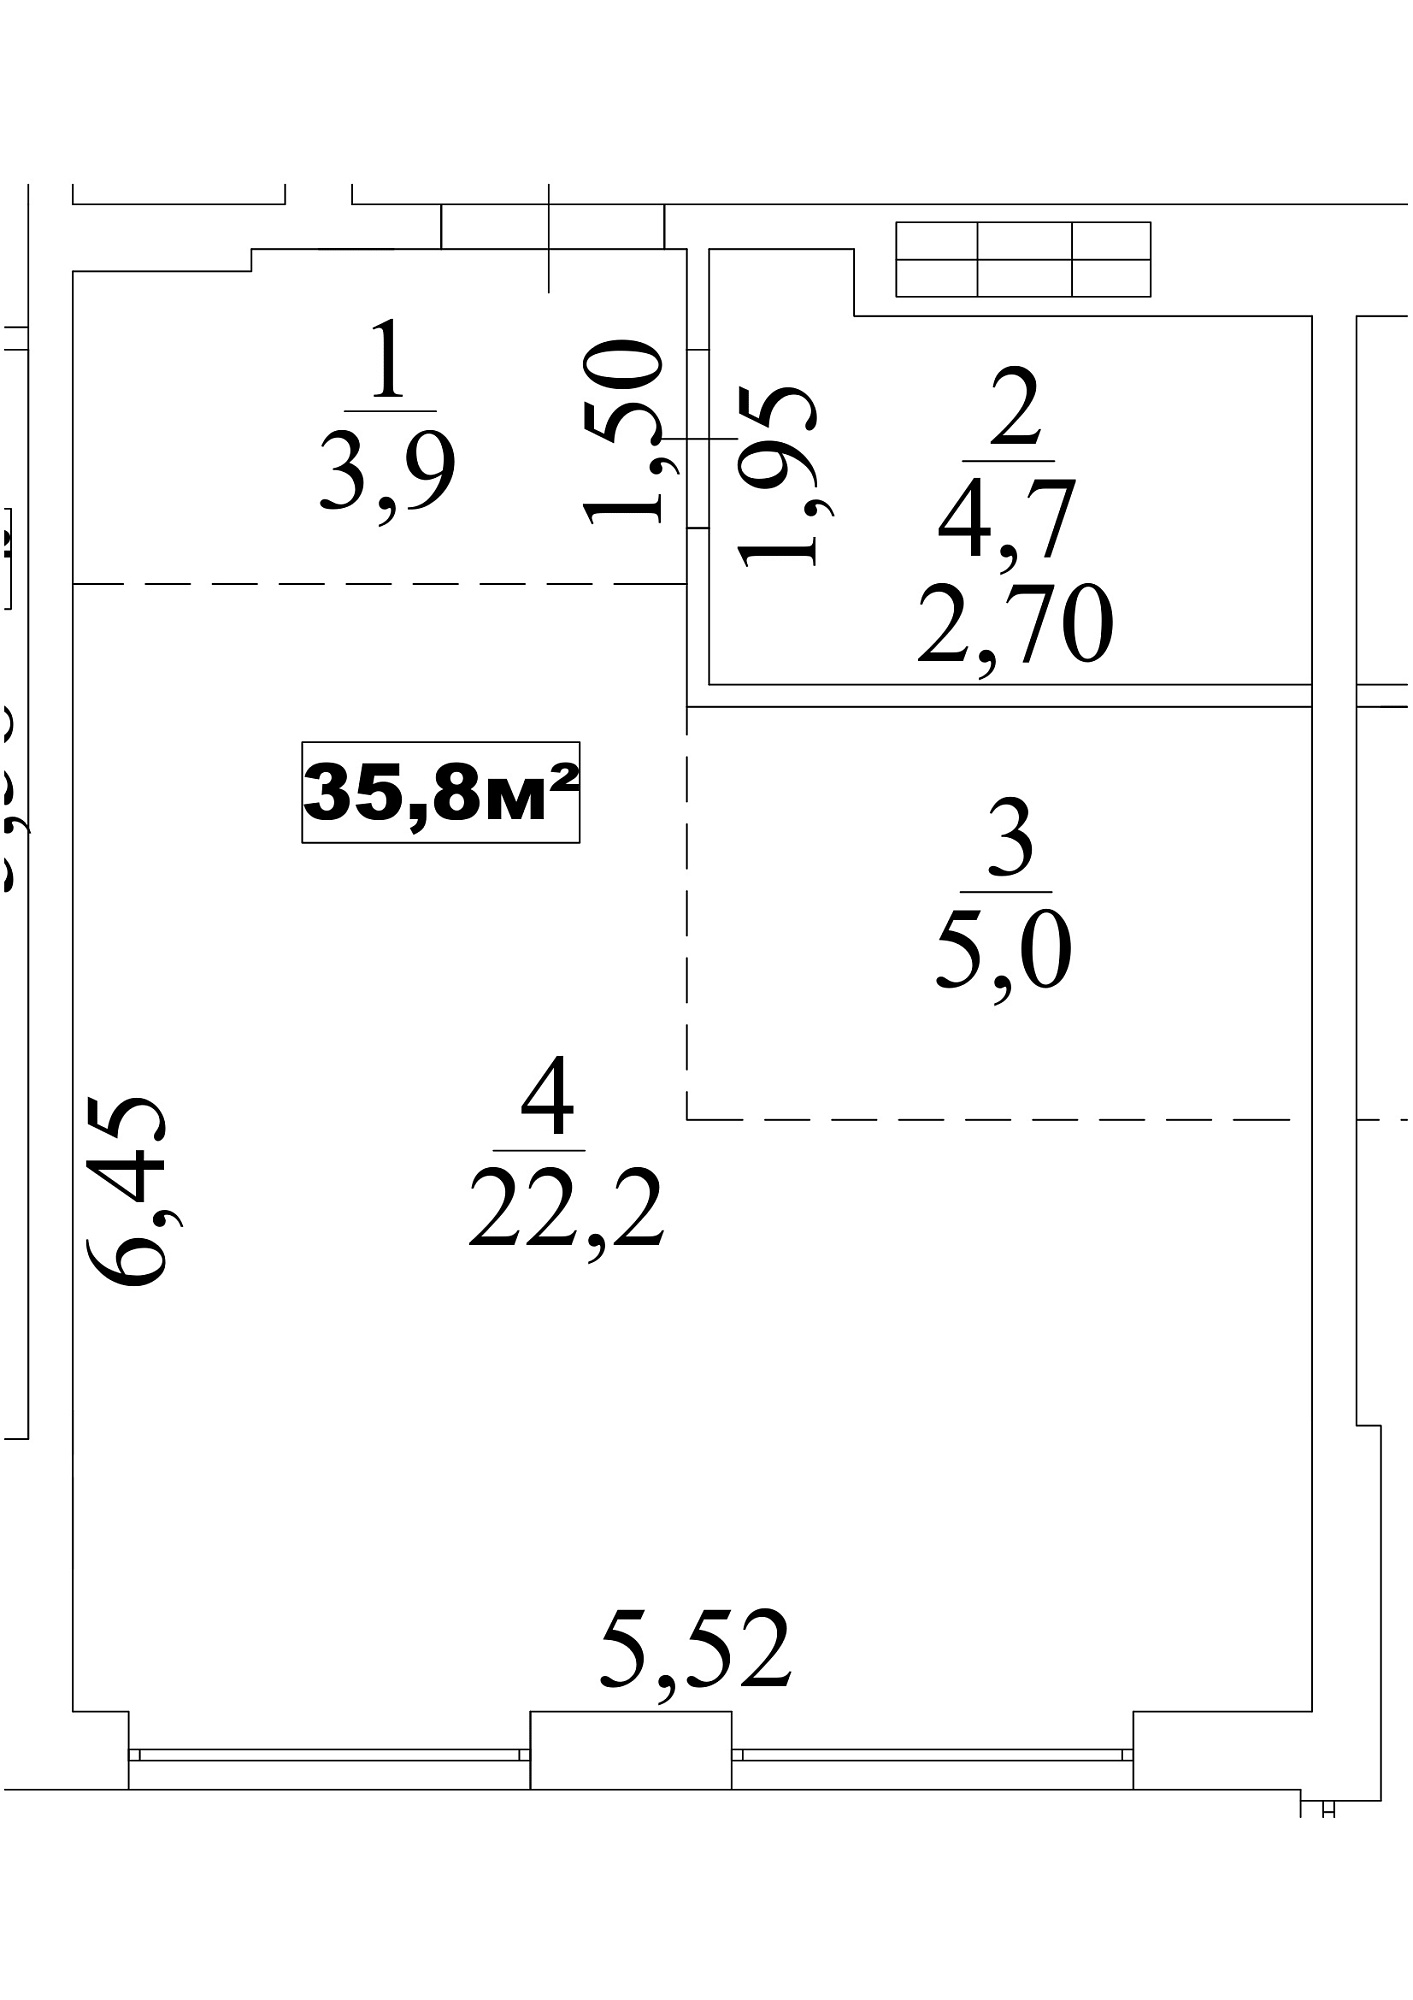 Planning Smart flats area 35.8m2, AB-10-04/00029.